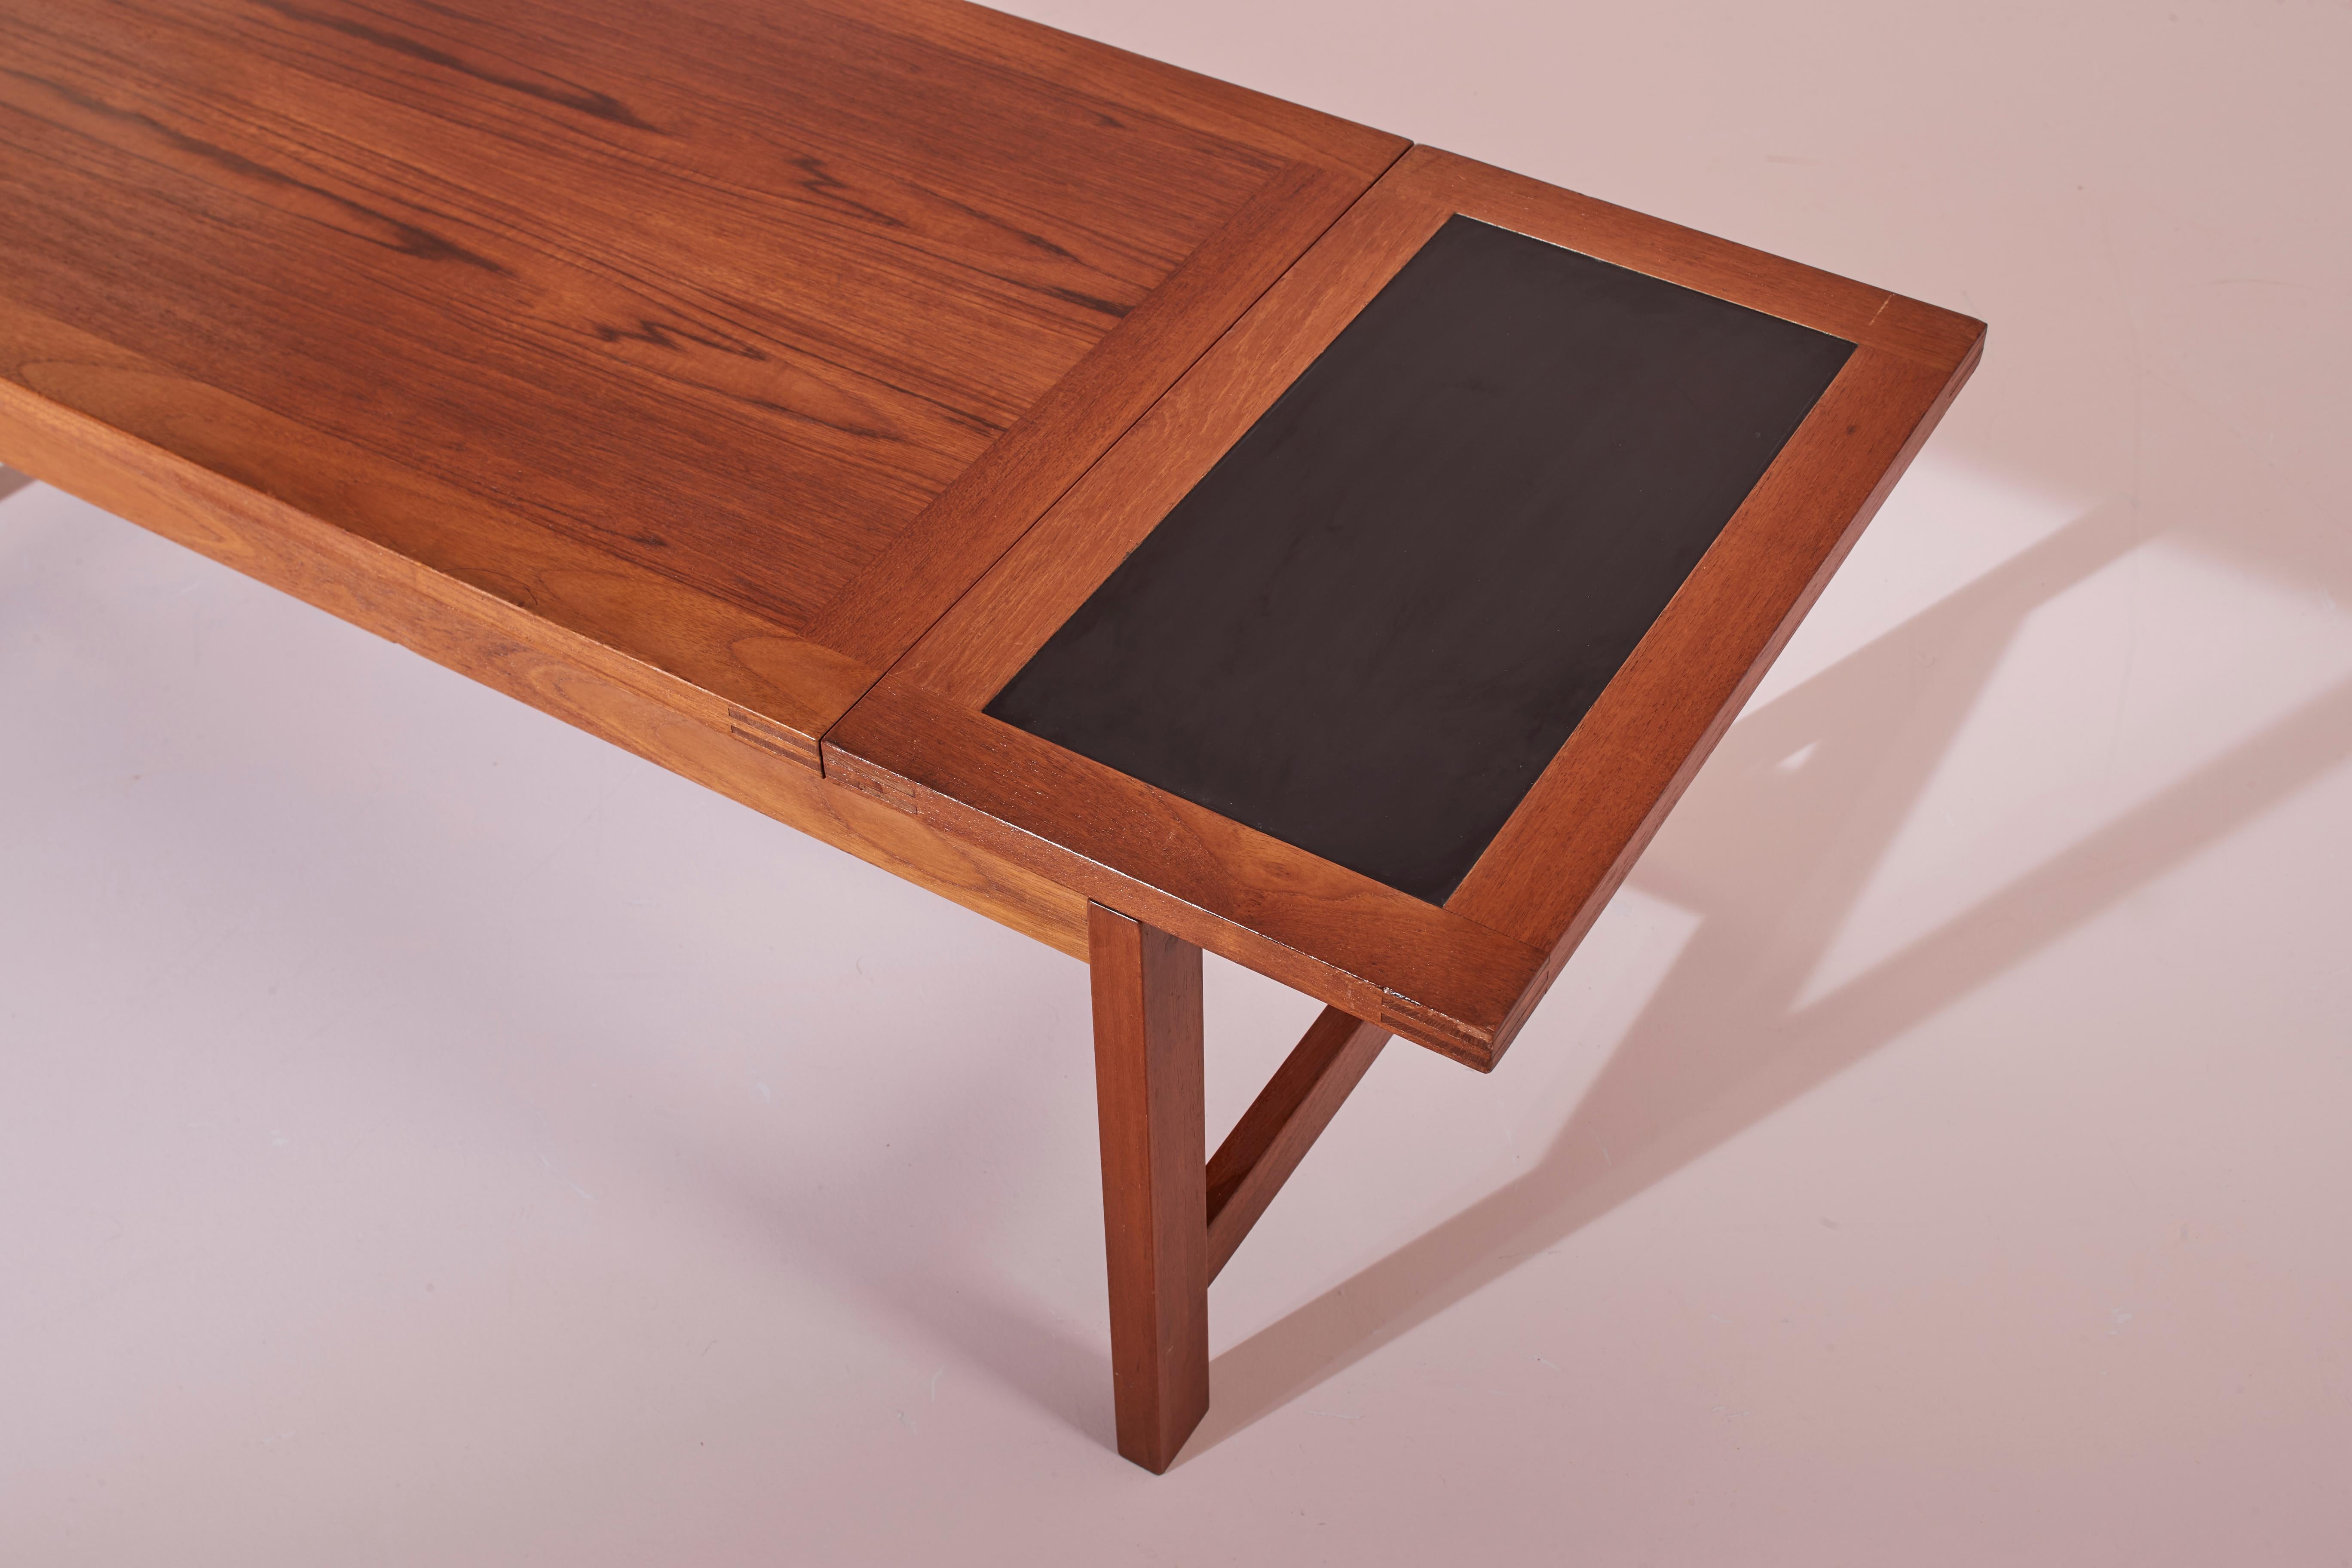 France & Son solid teak extendable coffee table, Denmark, 1960s For Sale 1